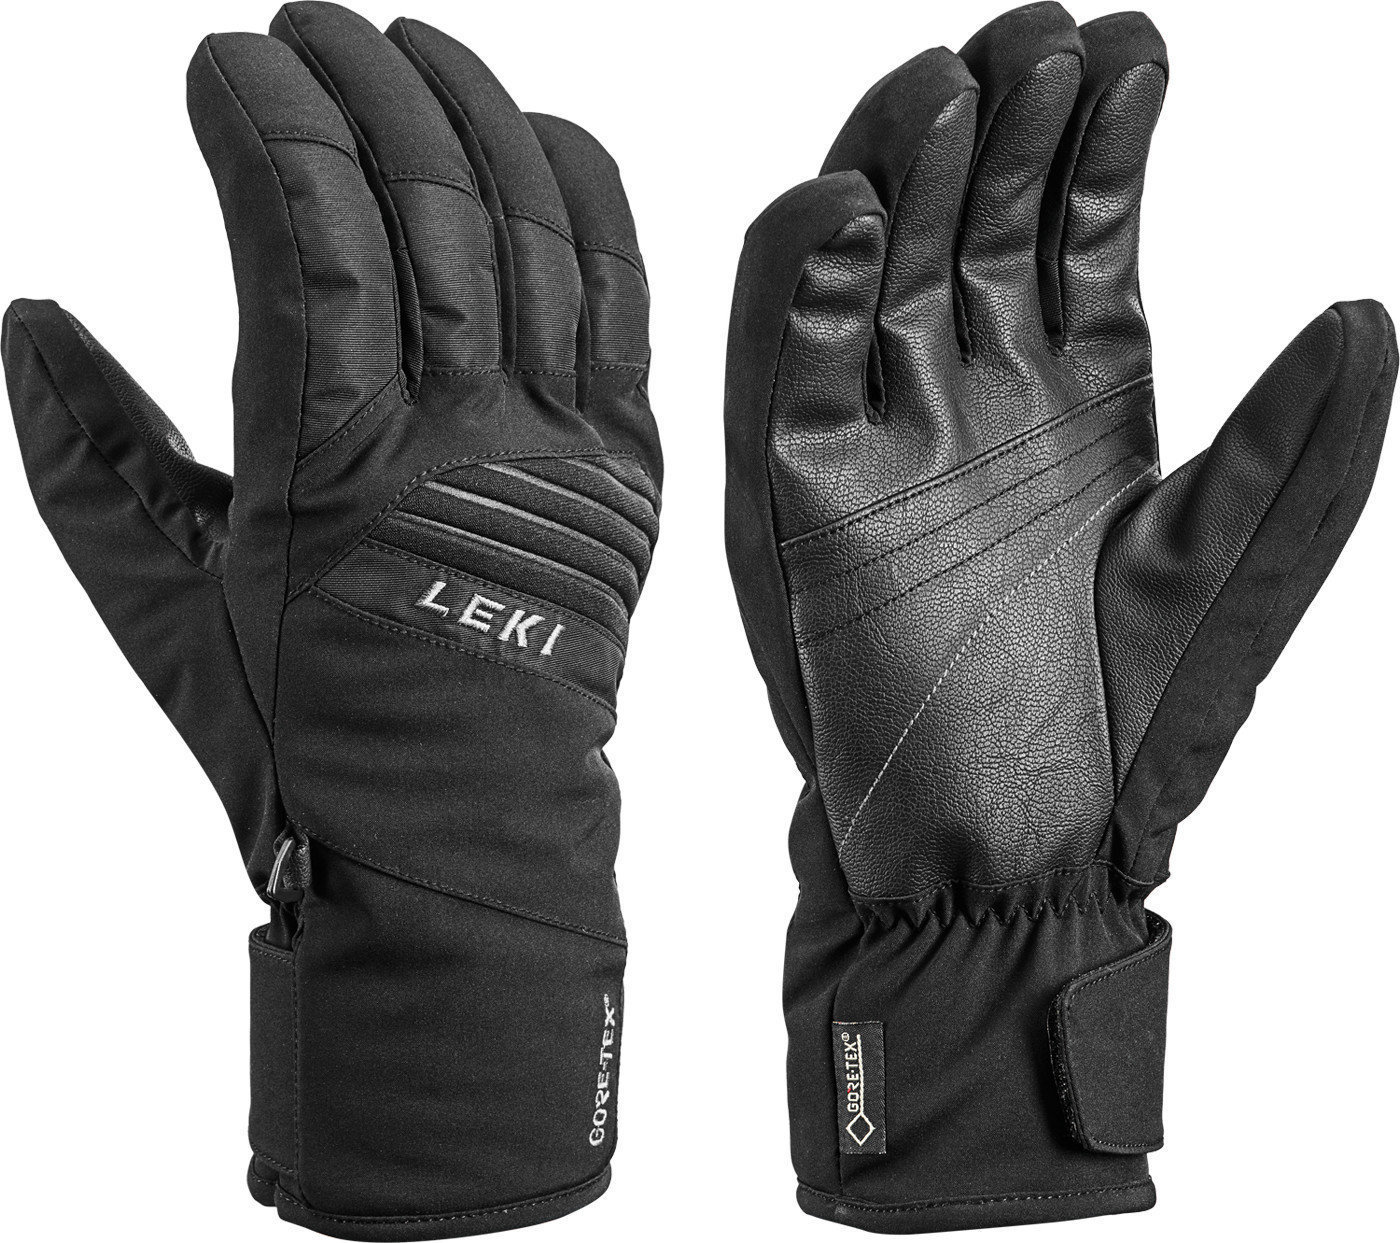 SkI Handschuhe Leki Space GTX Black 9,5 SkI Handschuhe